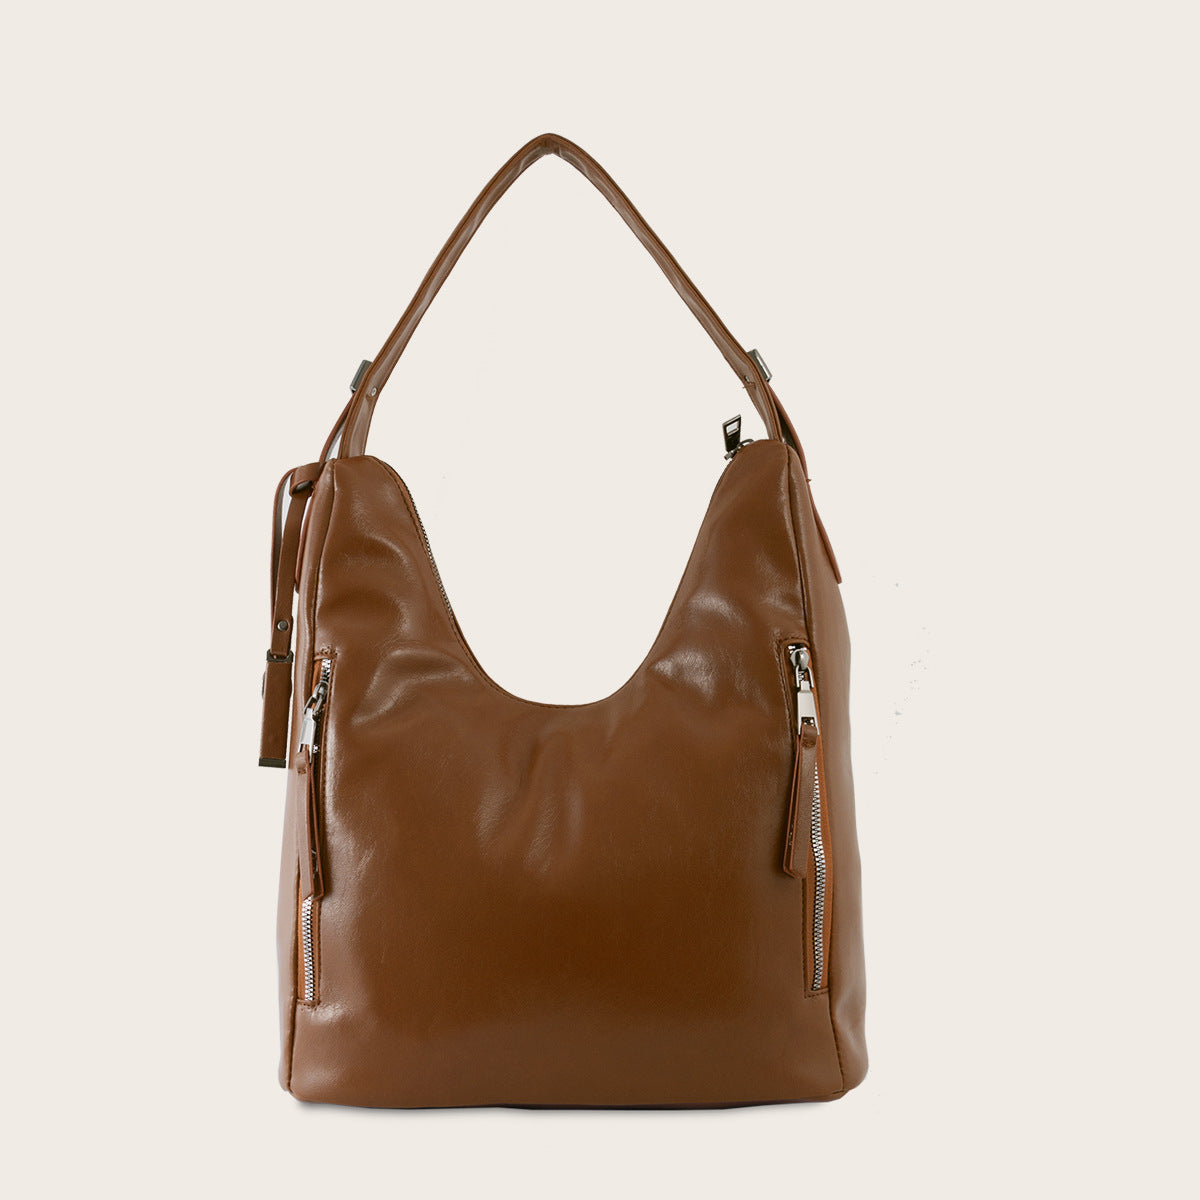 Soft leather simple one-shoulder portable handbags